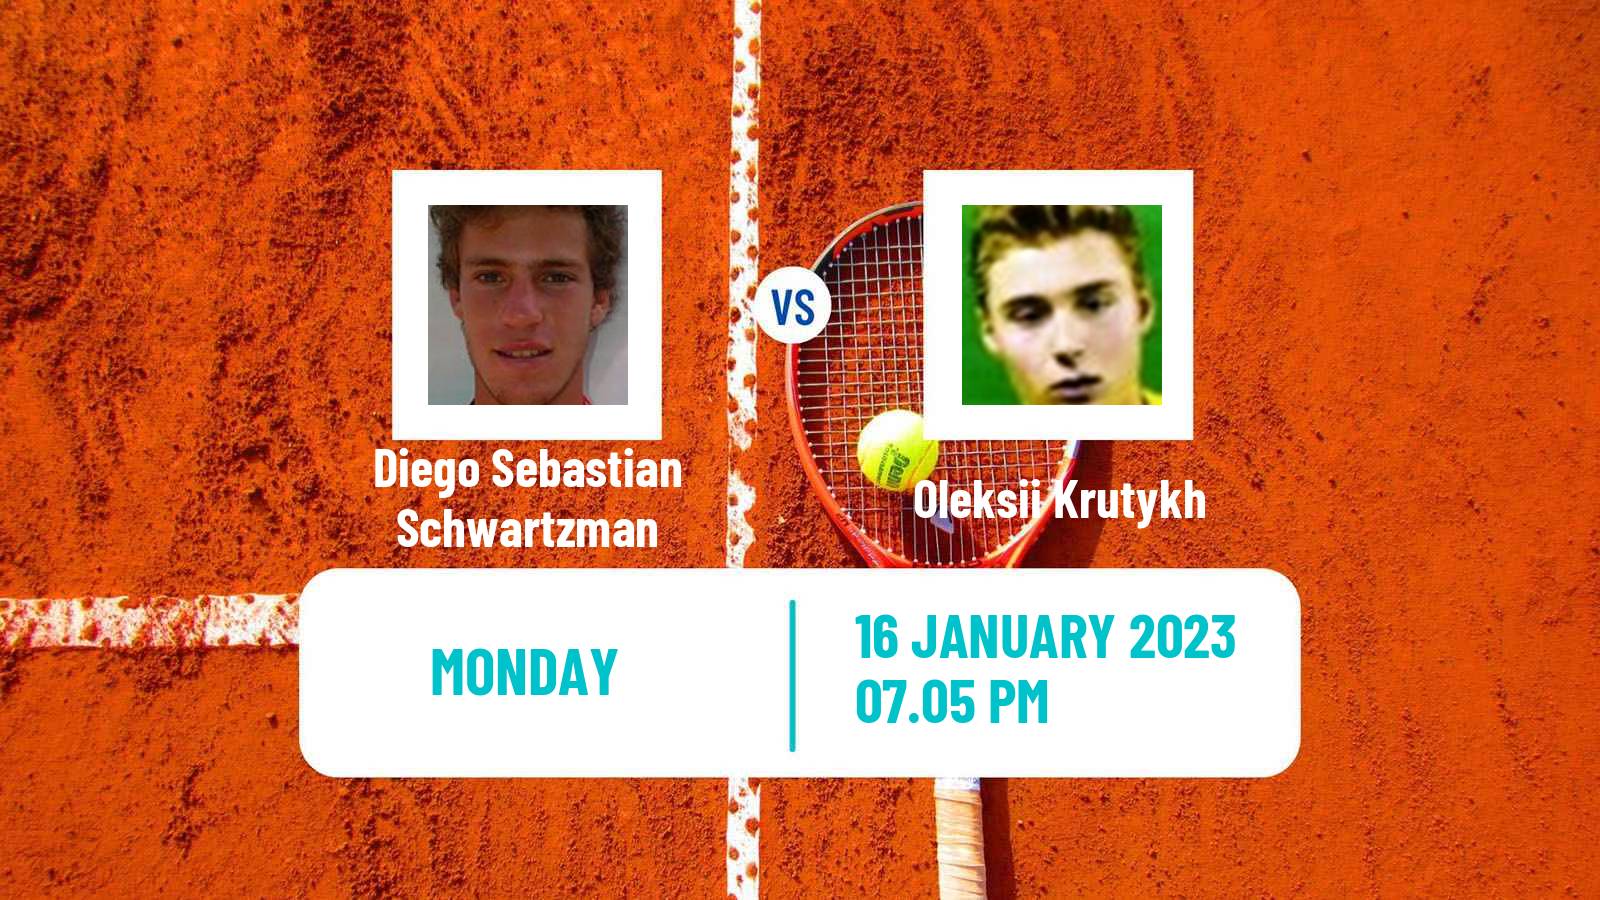 Tennis ATP Australian Open Diego Sebastian Schwartzman - Oleksii Krutykh